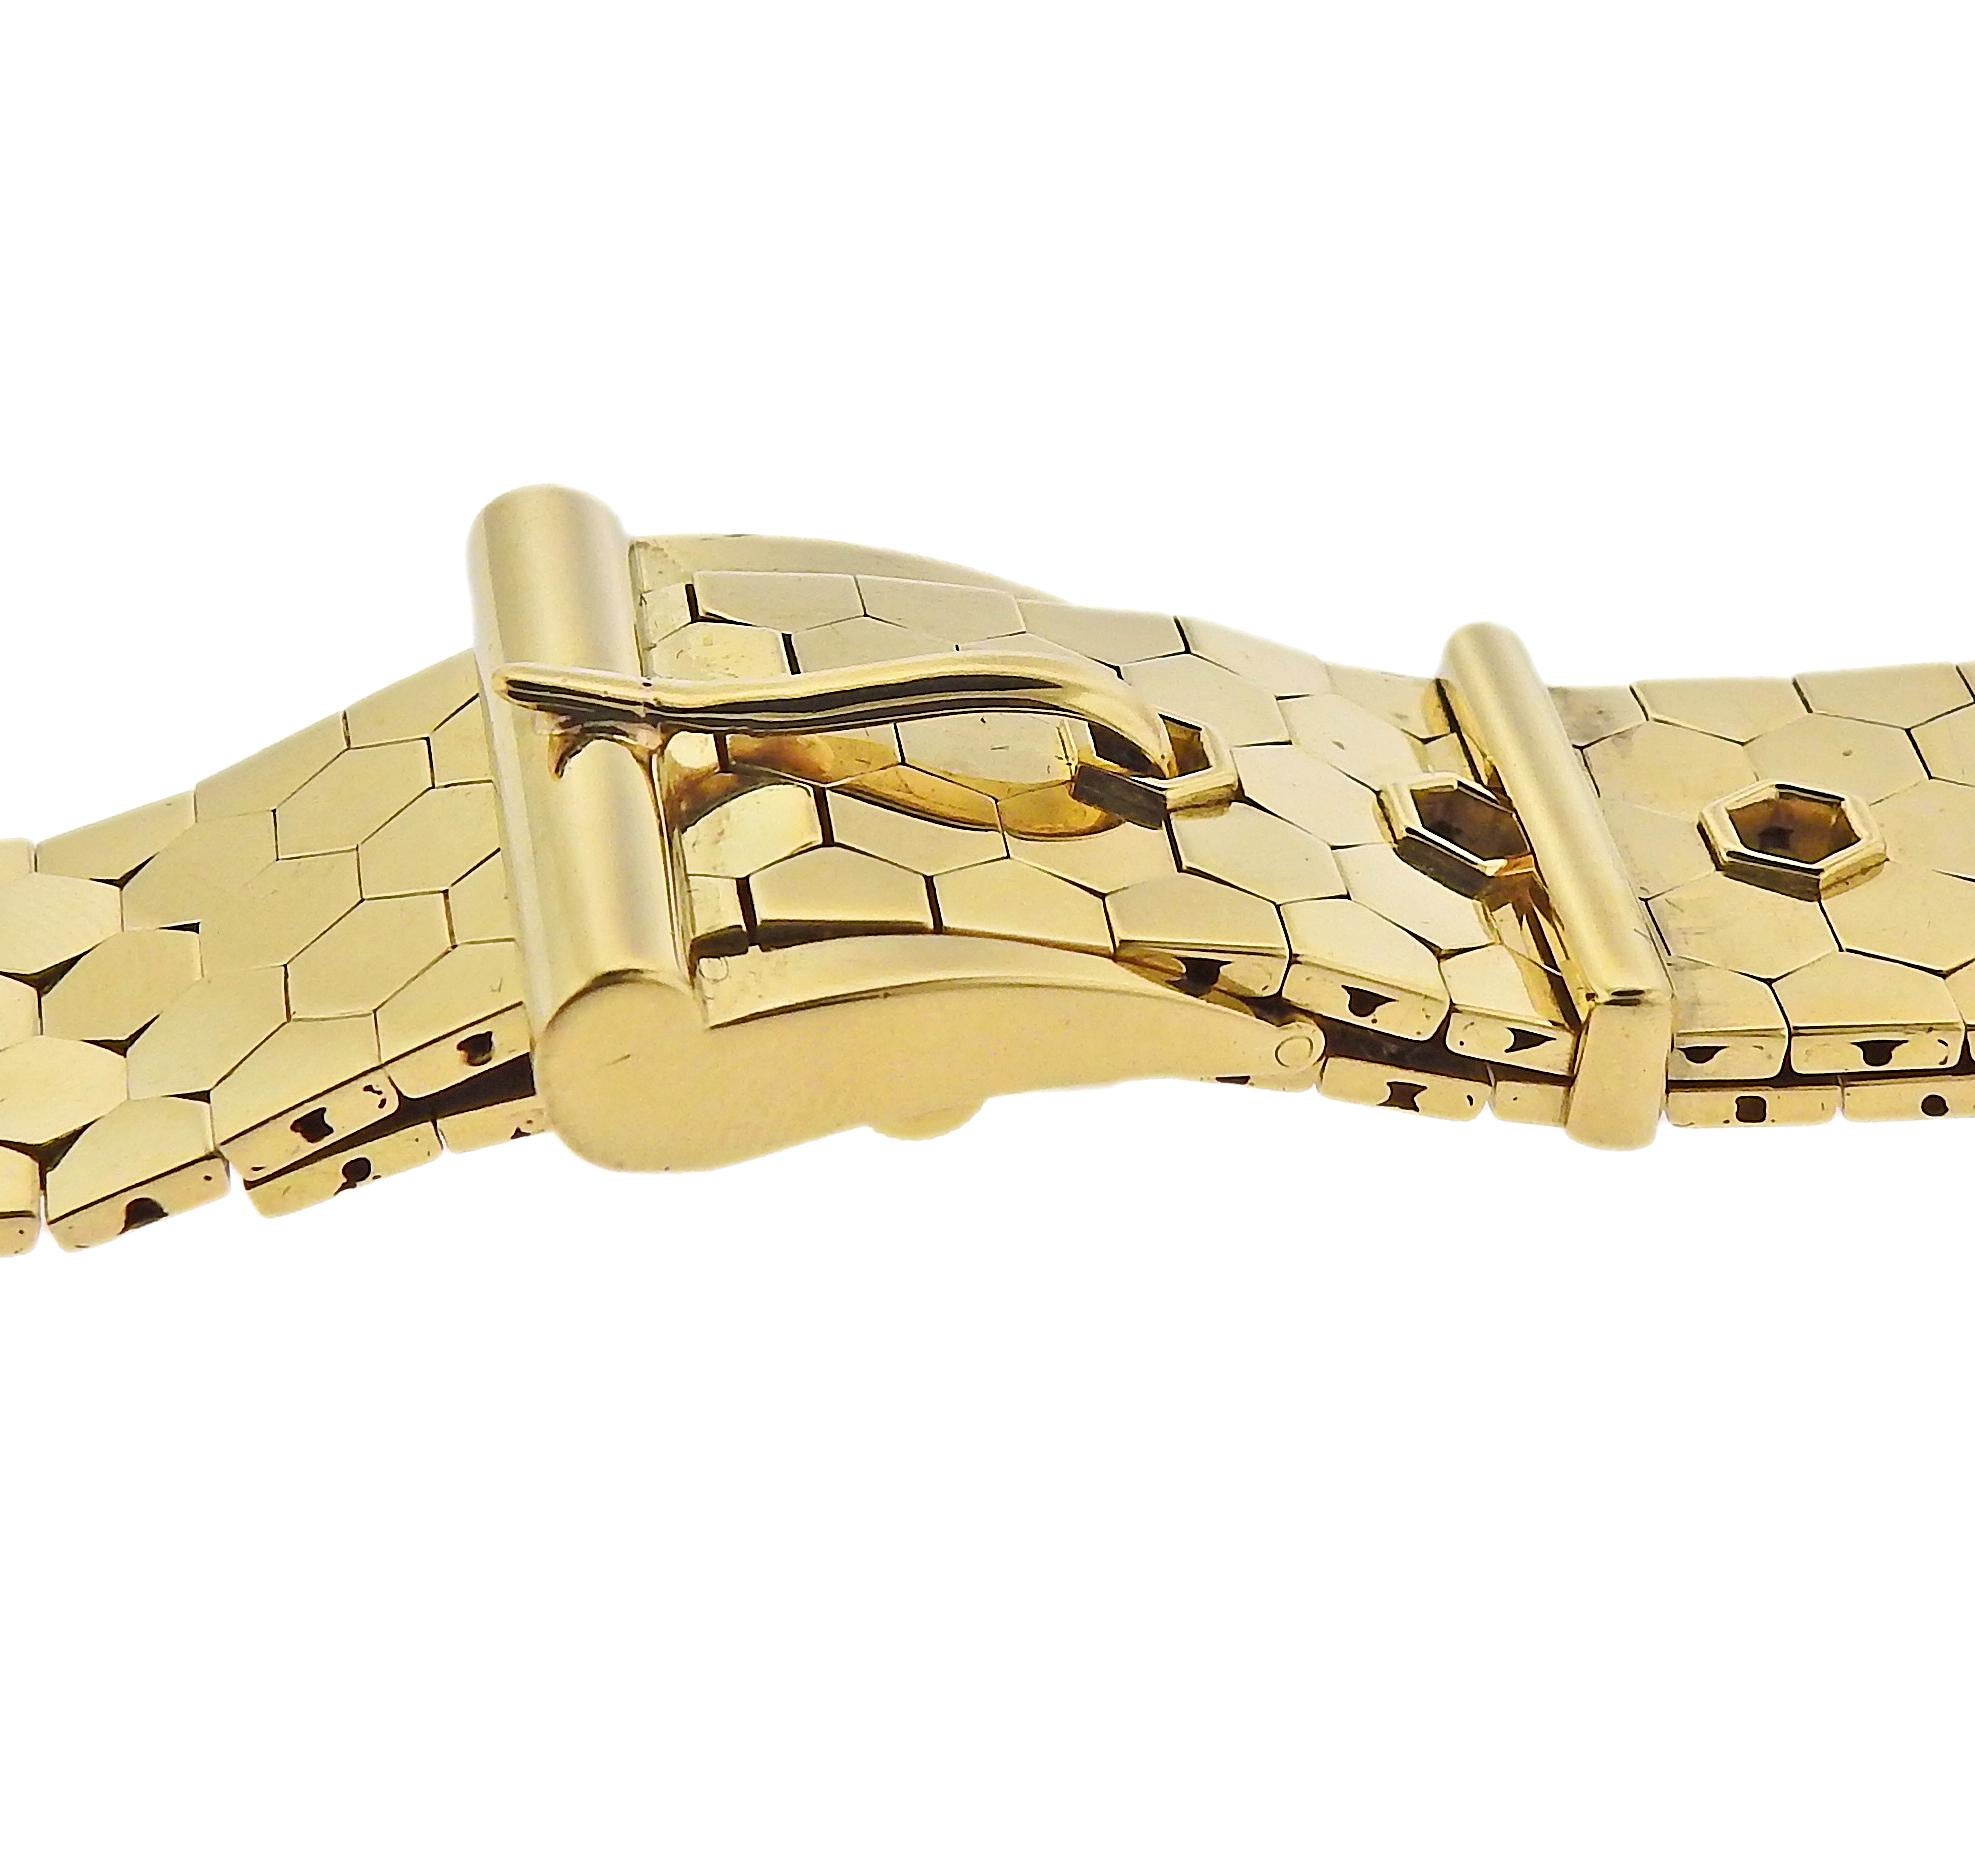 Retro mid century 18k gold honeycomb buckle design bracelet with IWC watch. Bracelet is 6 5/8